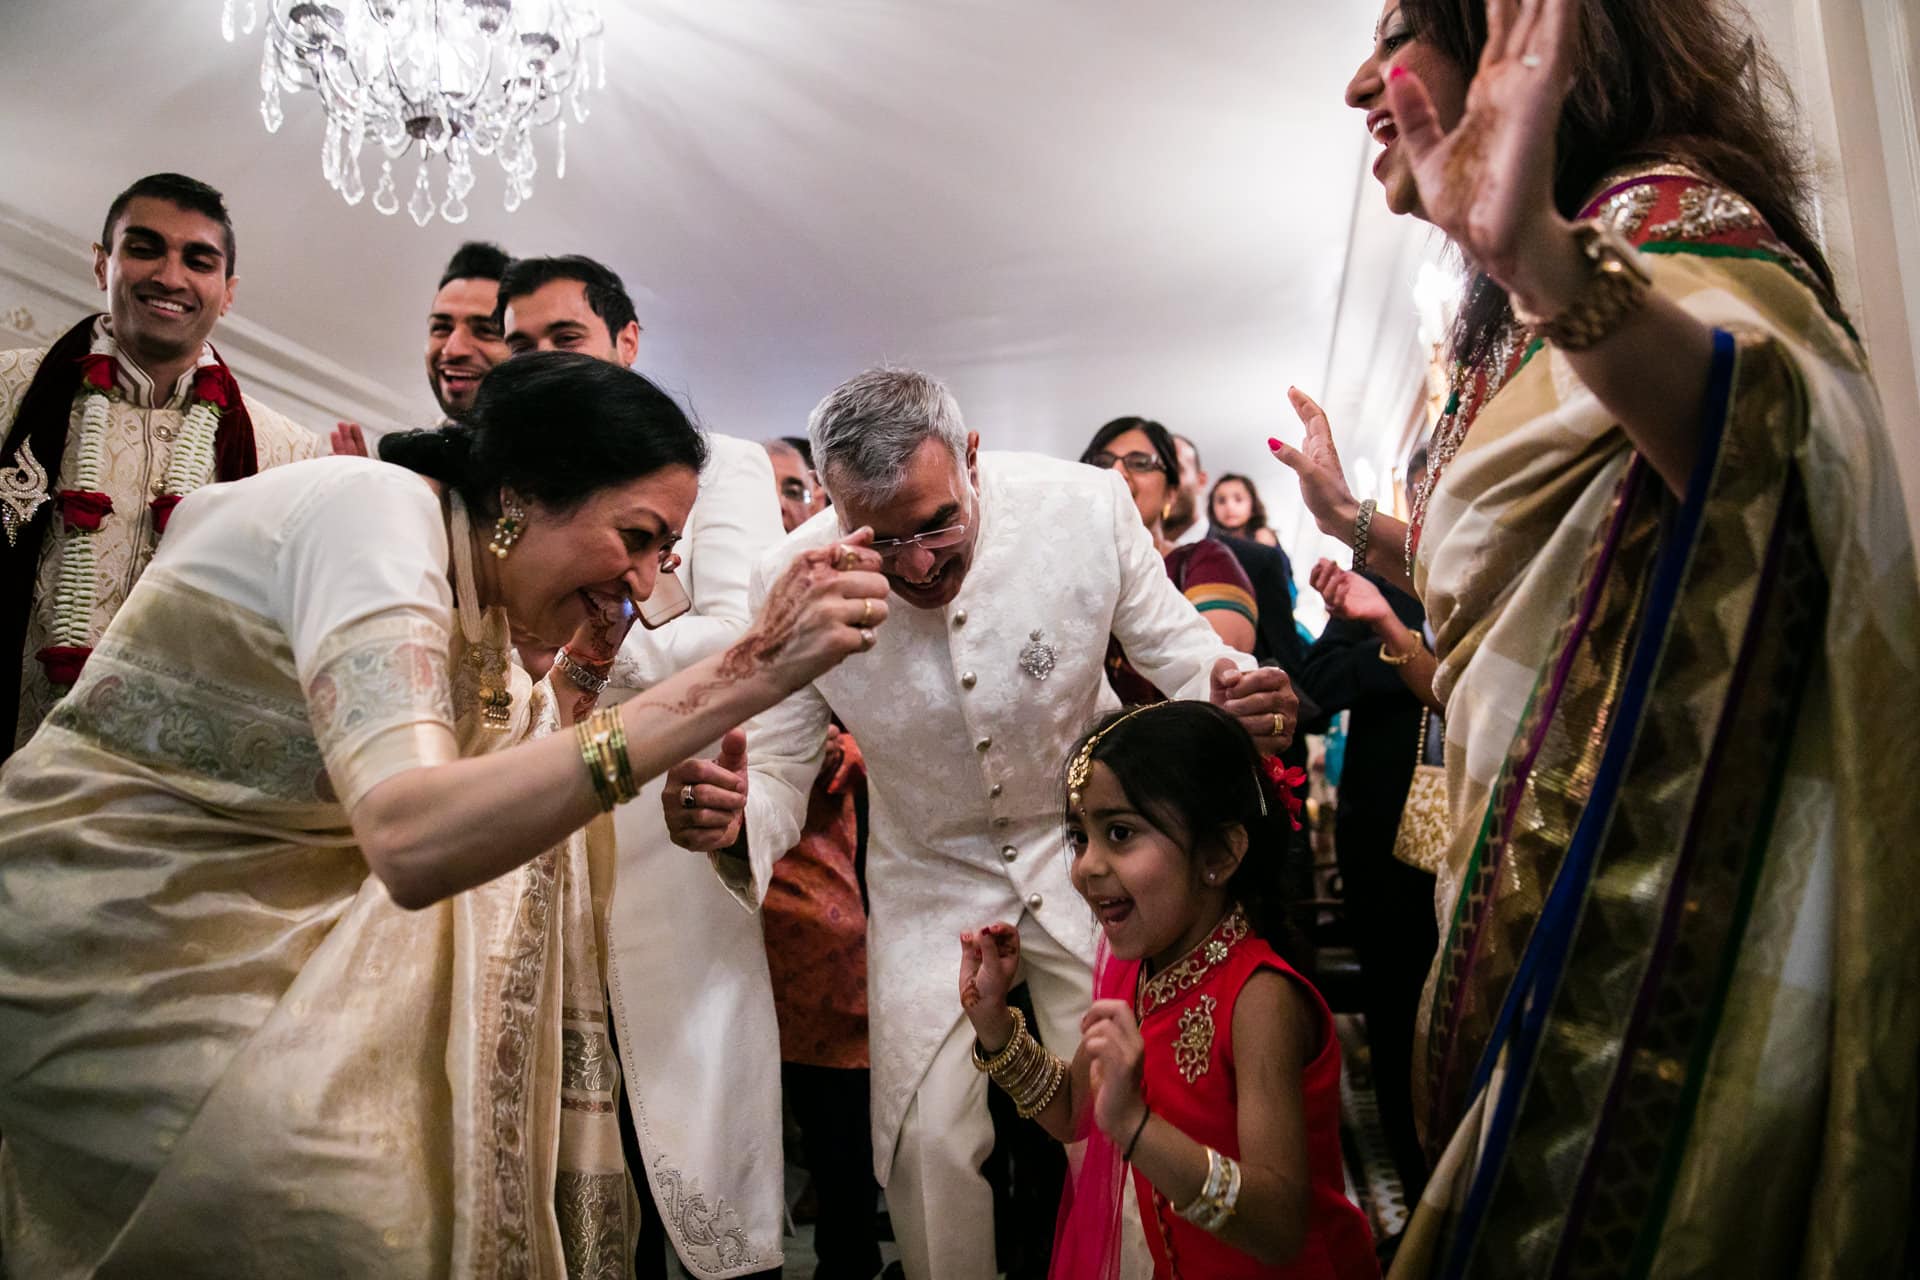 Jaan arrival at Hindu Wedding in London